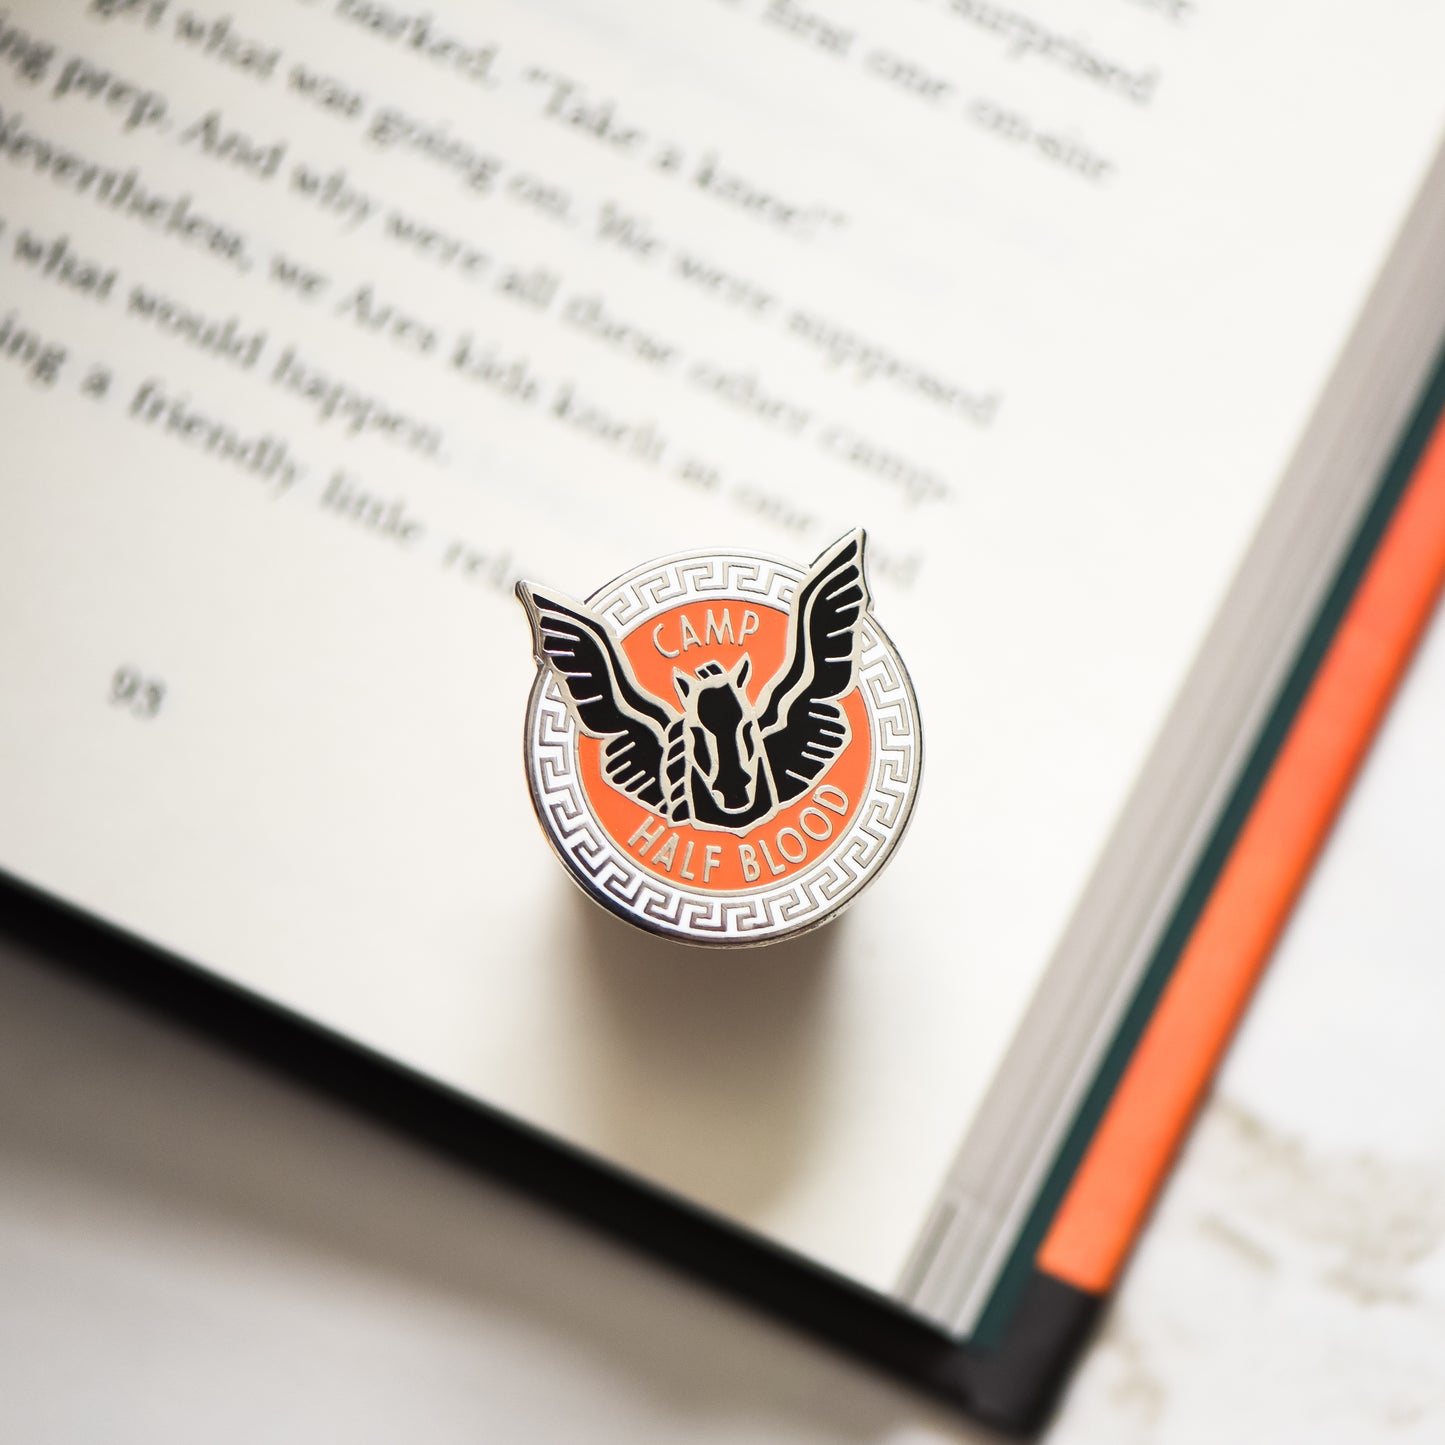 blackjack horse membership style pin on a Percy Jackson book